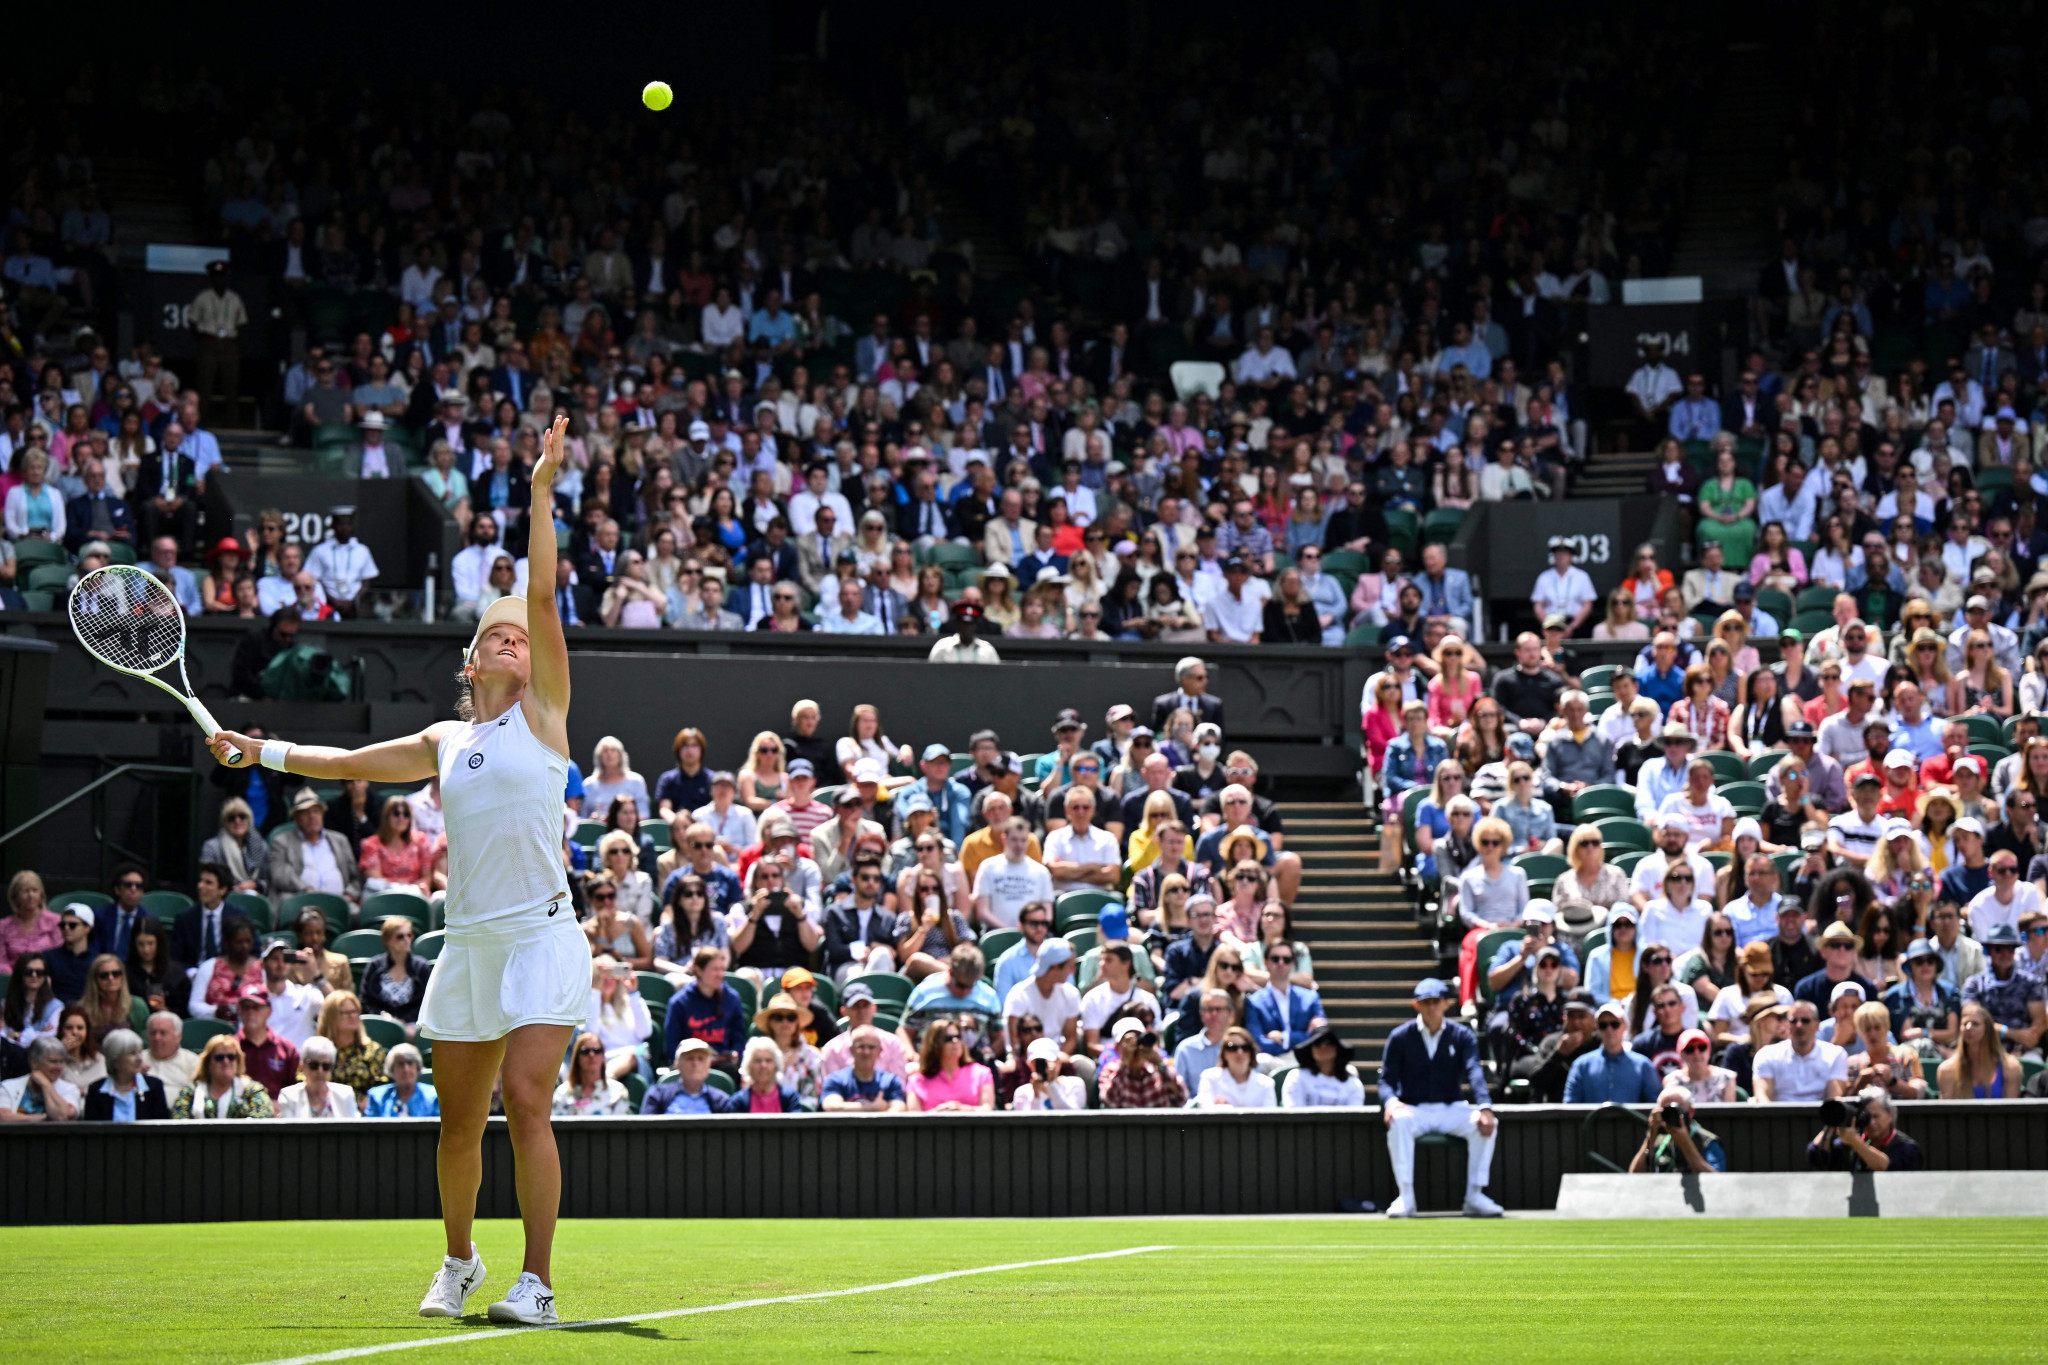 Polish top seed Iga Świątek won her first-round match at Wimbledon to extend her winning streak to 36 matches ©Getty Images